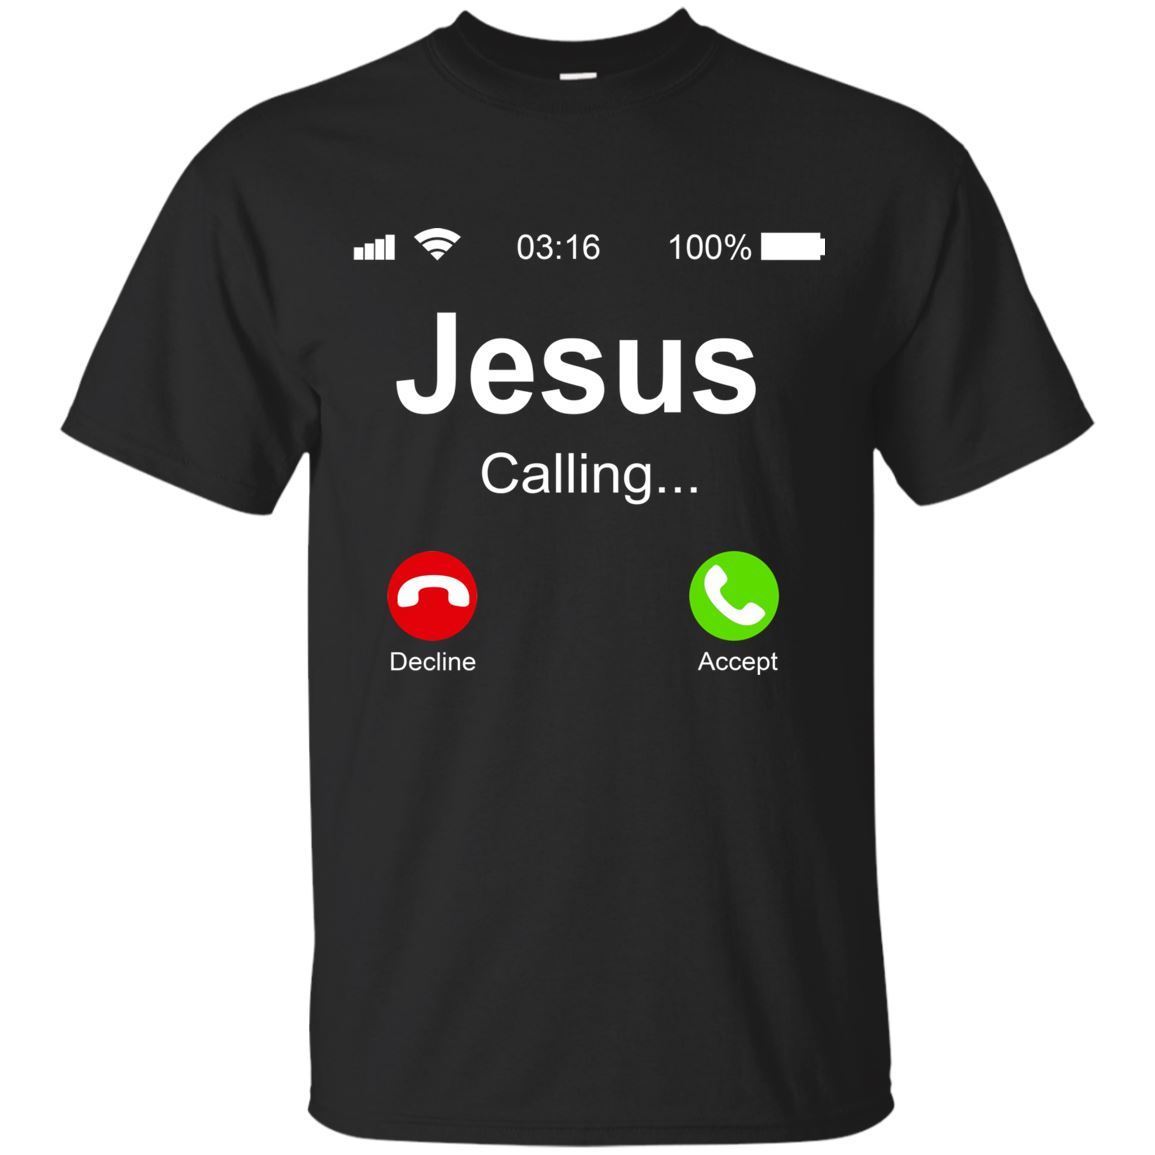 Jesus is Calling Christian T-shirt - Unique Funny T-shirt for Men  Cool Casual pride t shirt men Unisex New Fashion tshirt